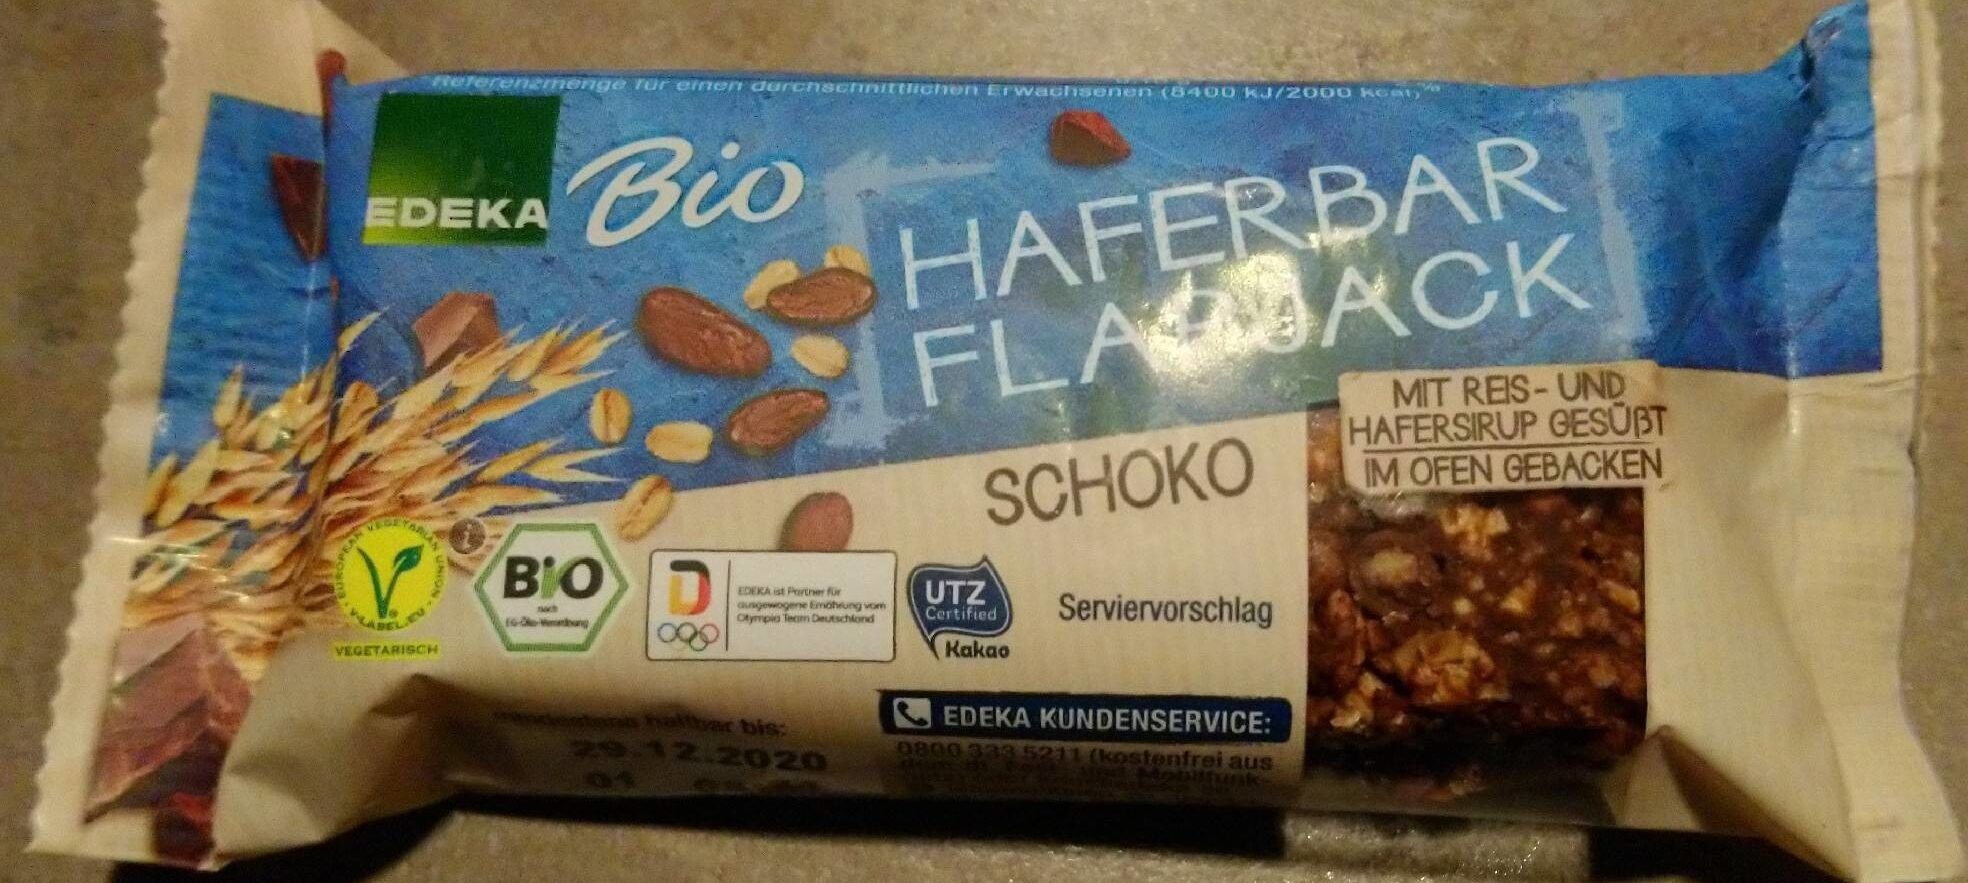 Haferbar Flapjack Schoko - Product - de